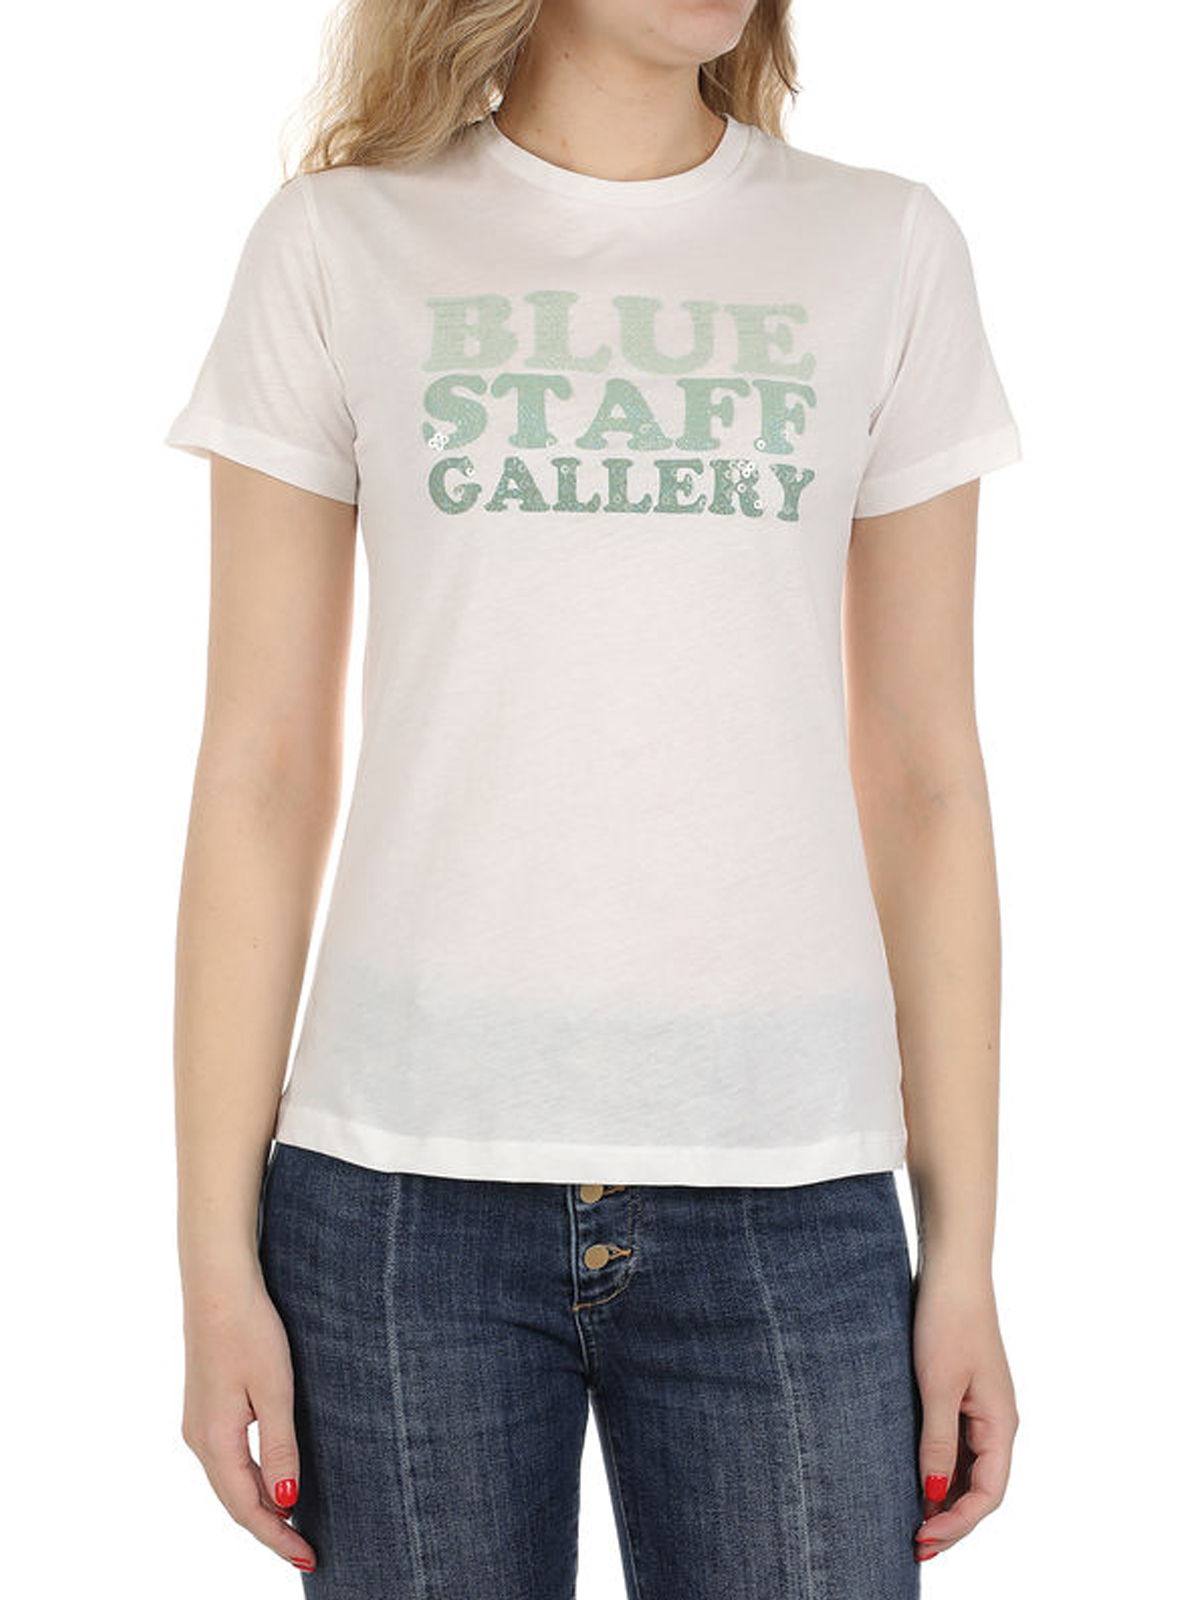   Staff | Blue Staff Gallery Tee | Womens T-Shirts